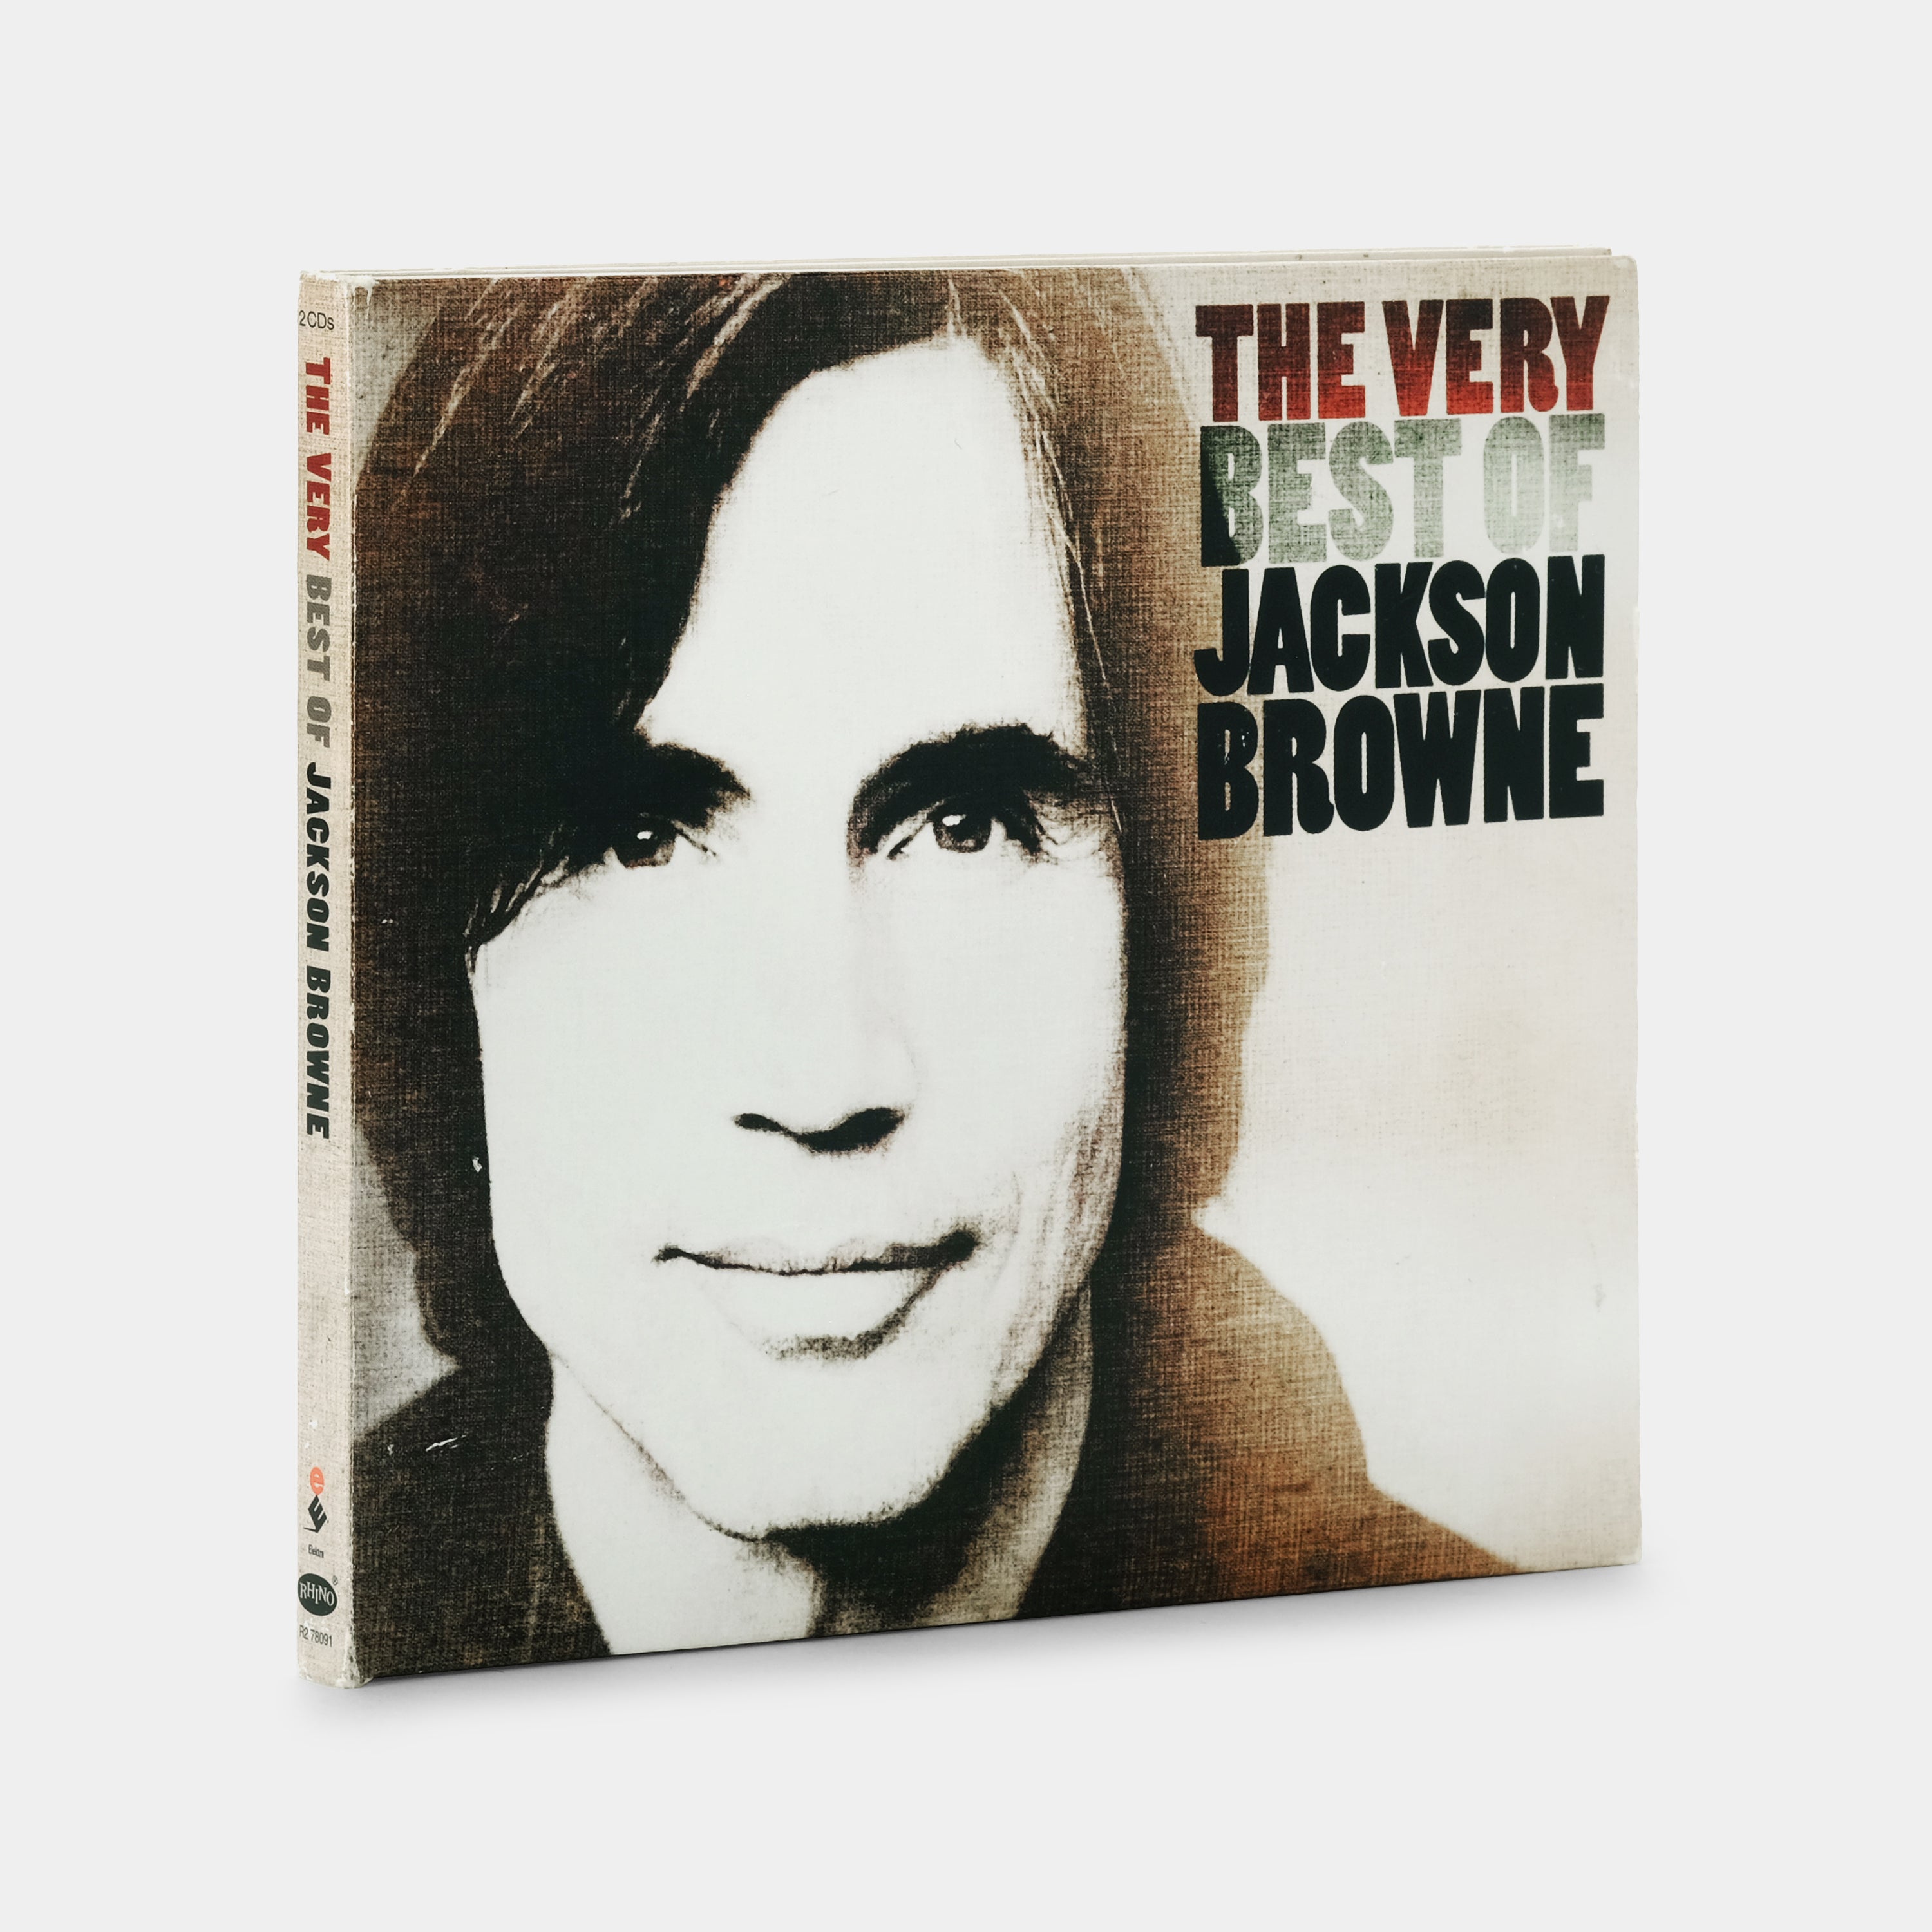 Jackson Browne - The Very Best Of Jackson Browne 2xCD